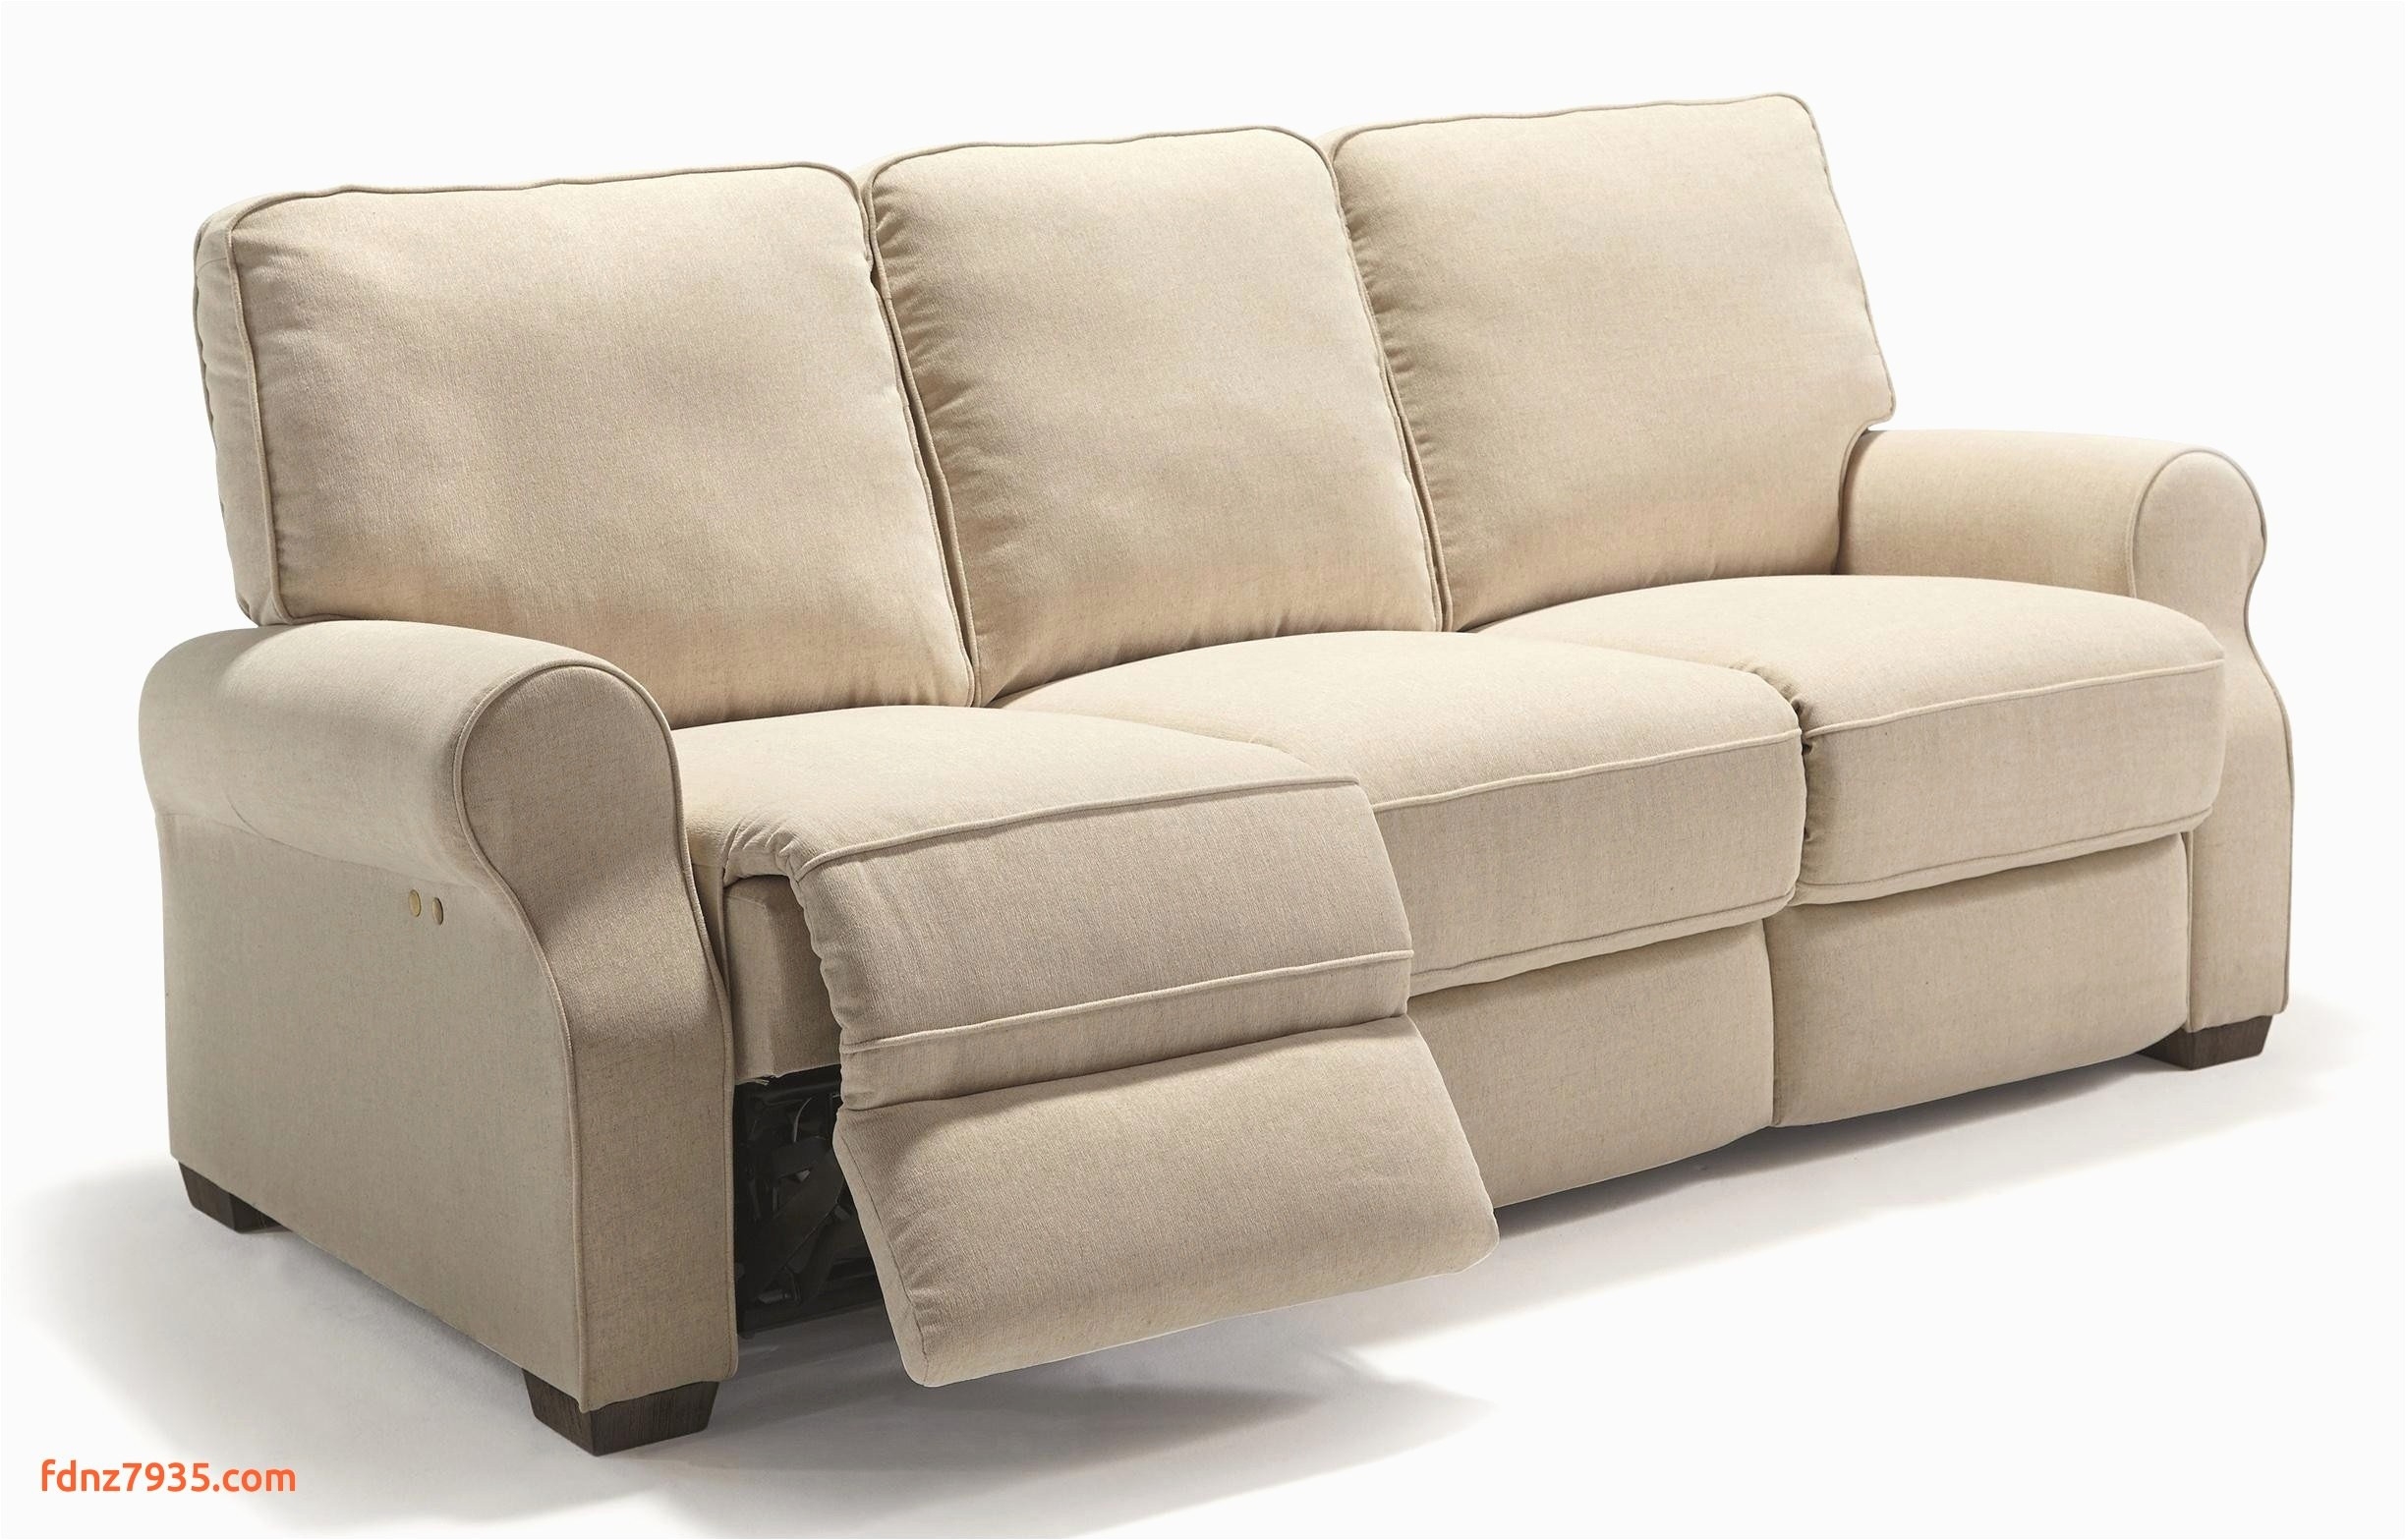 Ethan Allen Sleeper sofa O Ethan Allen Sleeper sofas sofa Bed Reviews Amazing Furniture